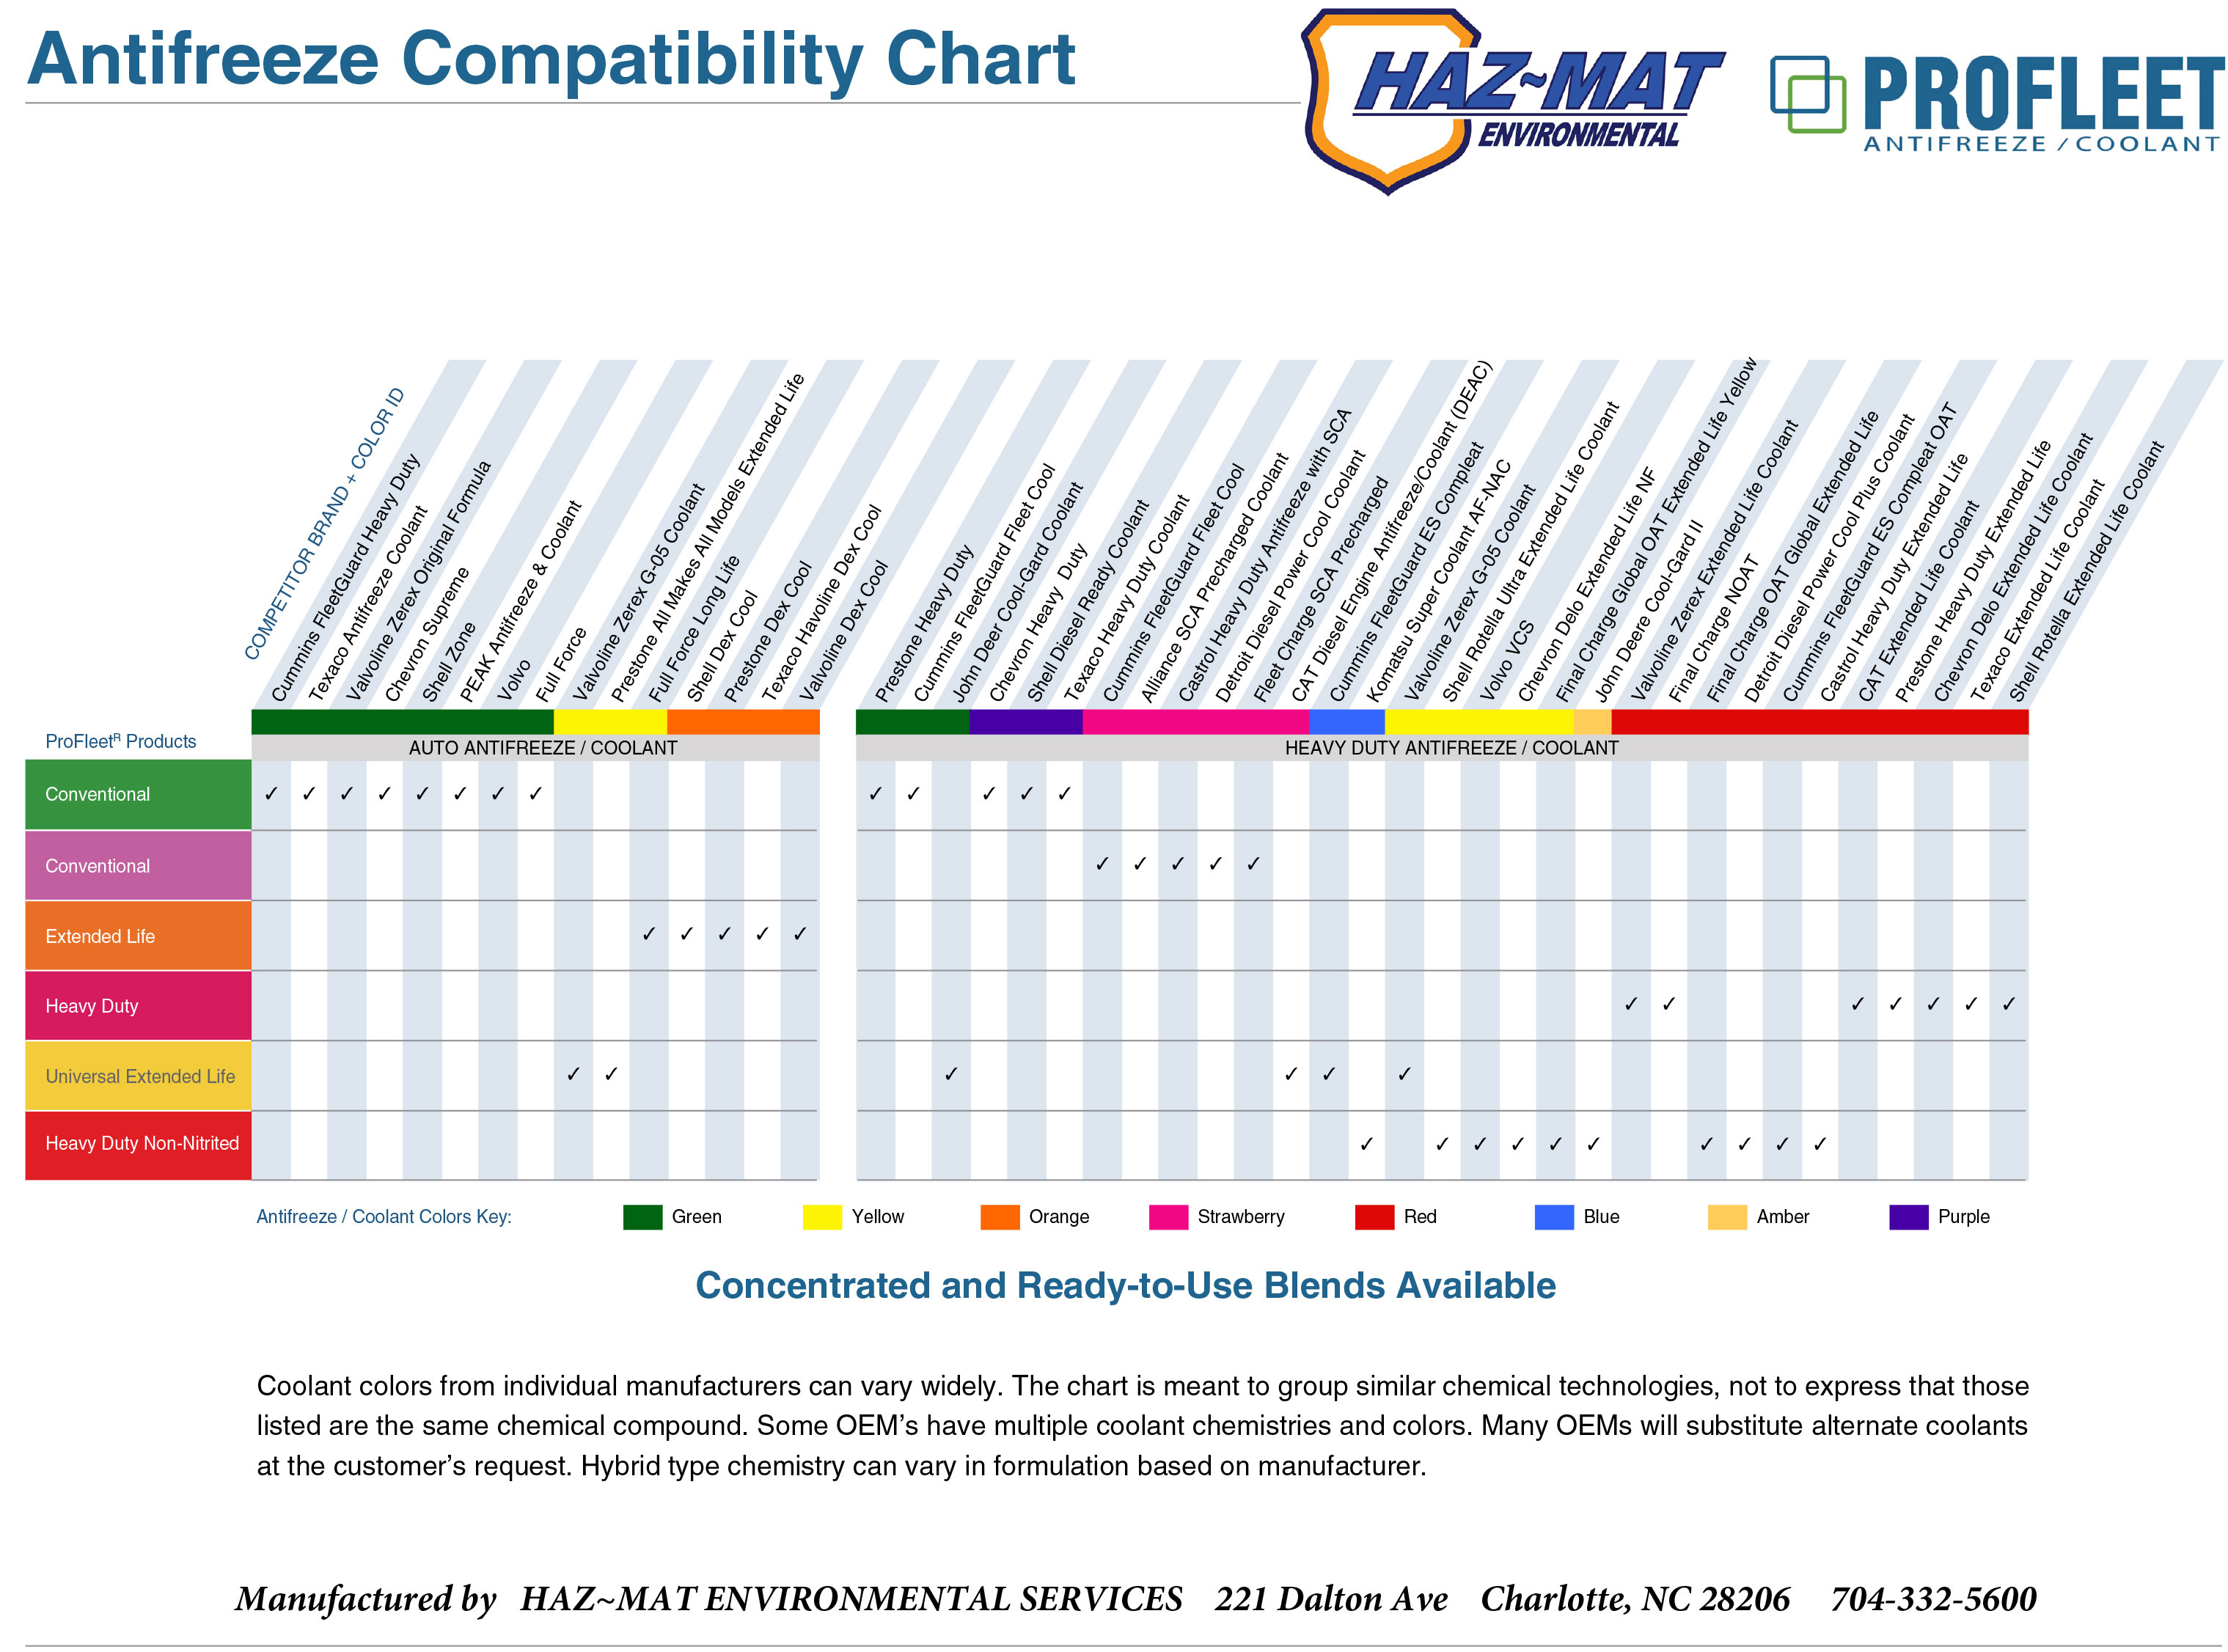 Hazardous Material Compatibility Chart